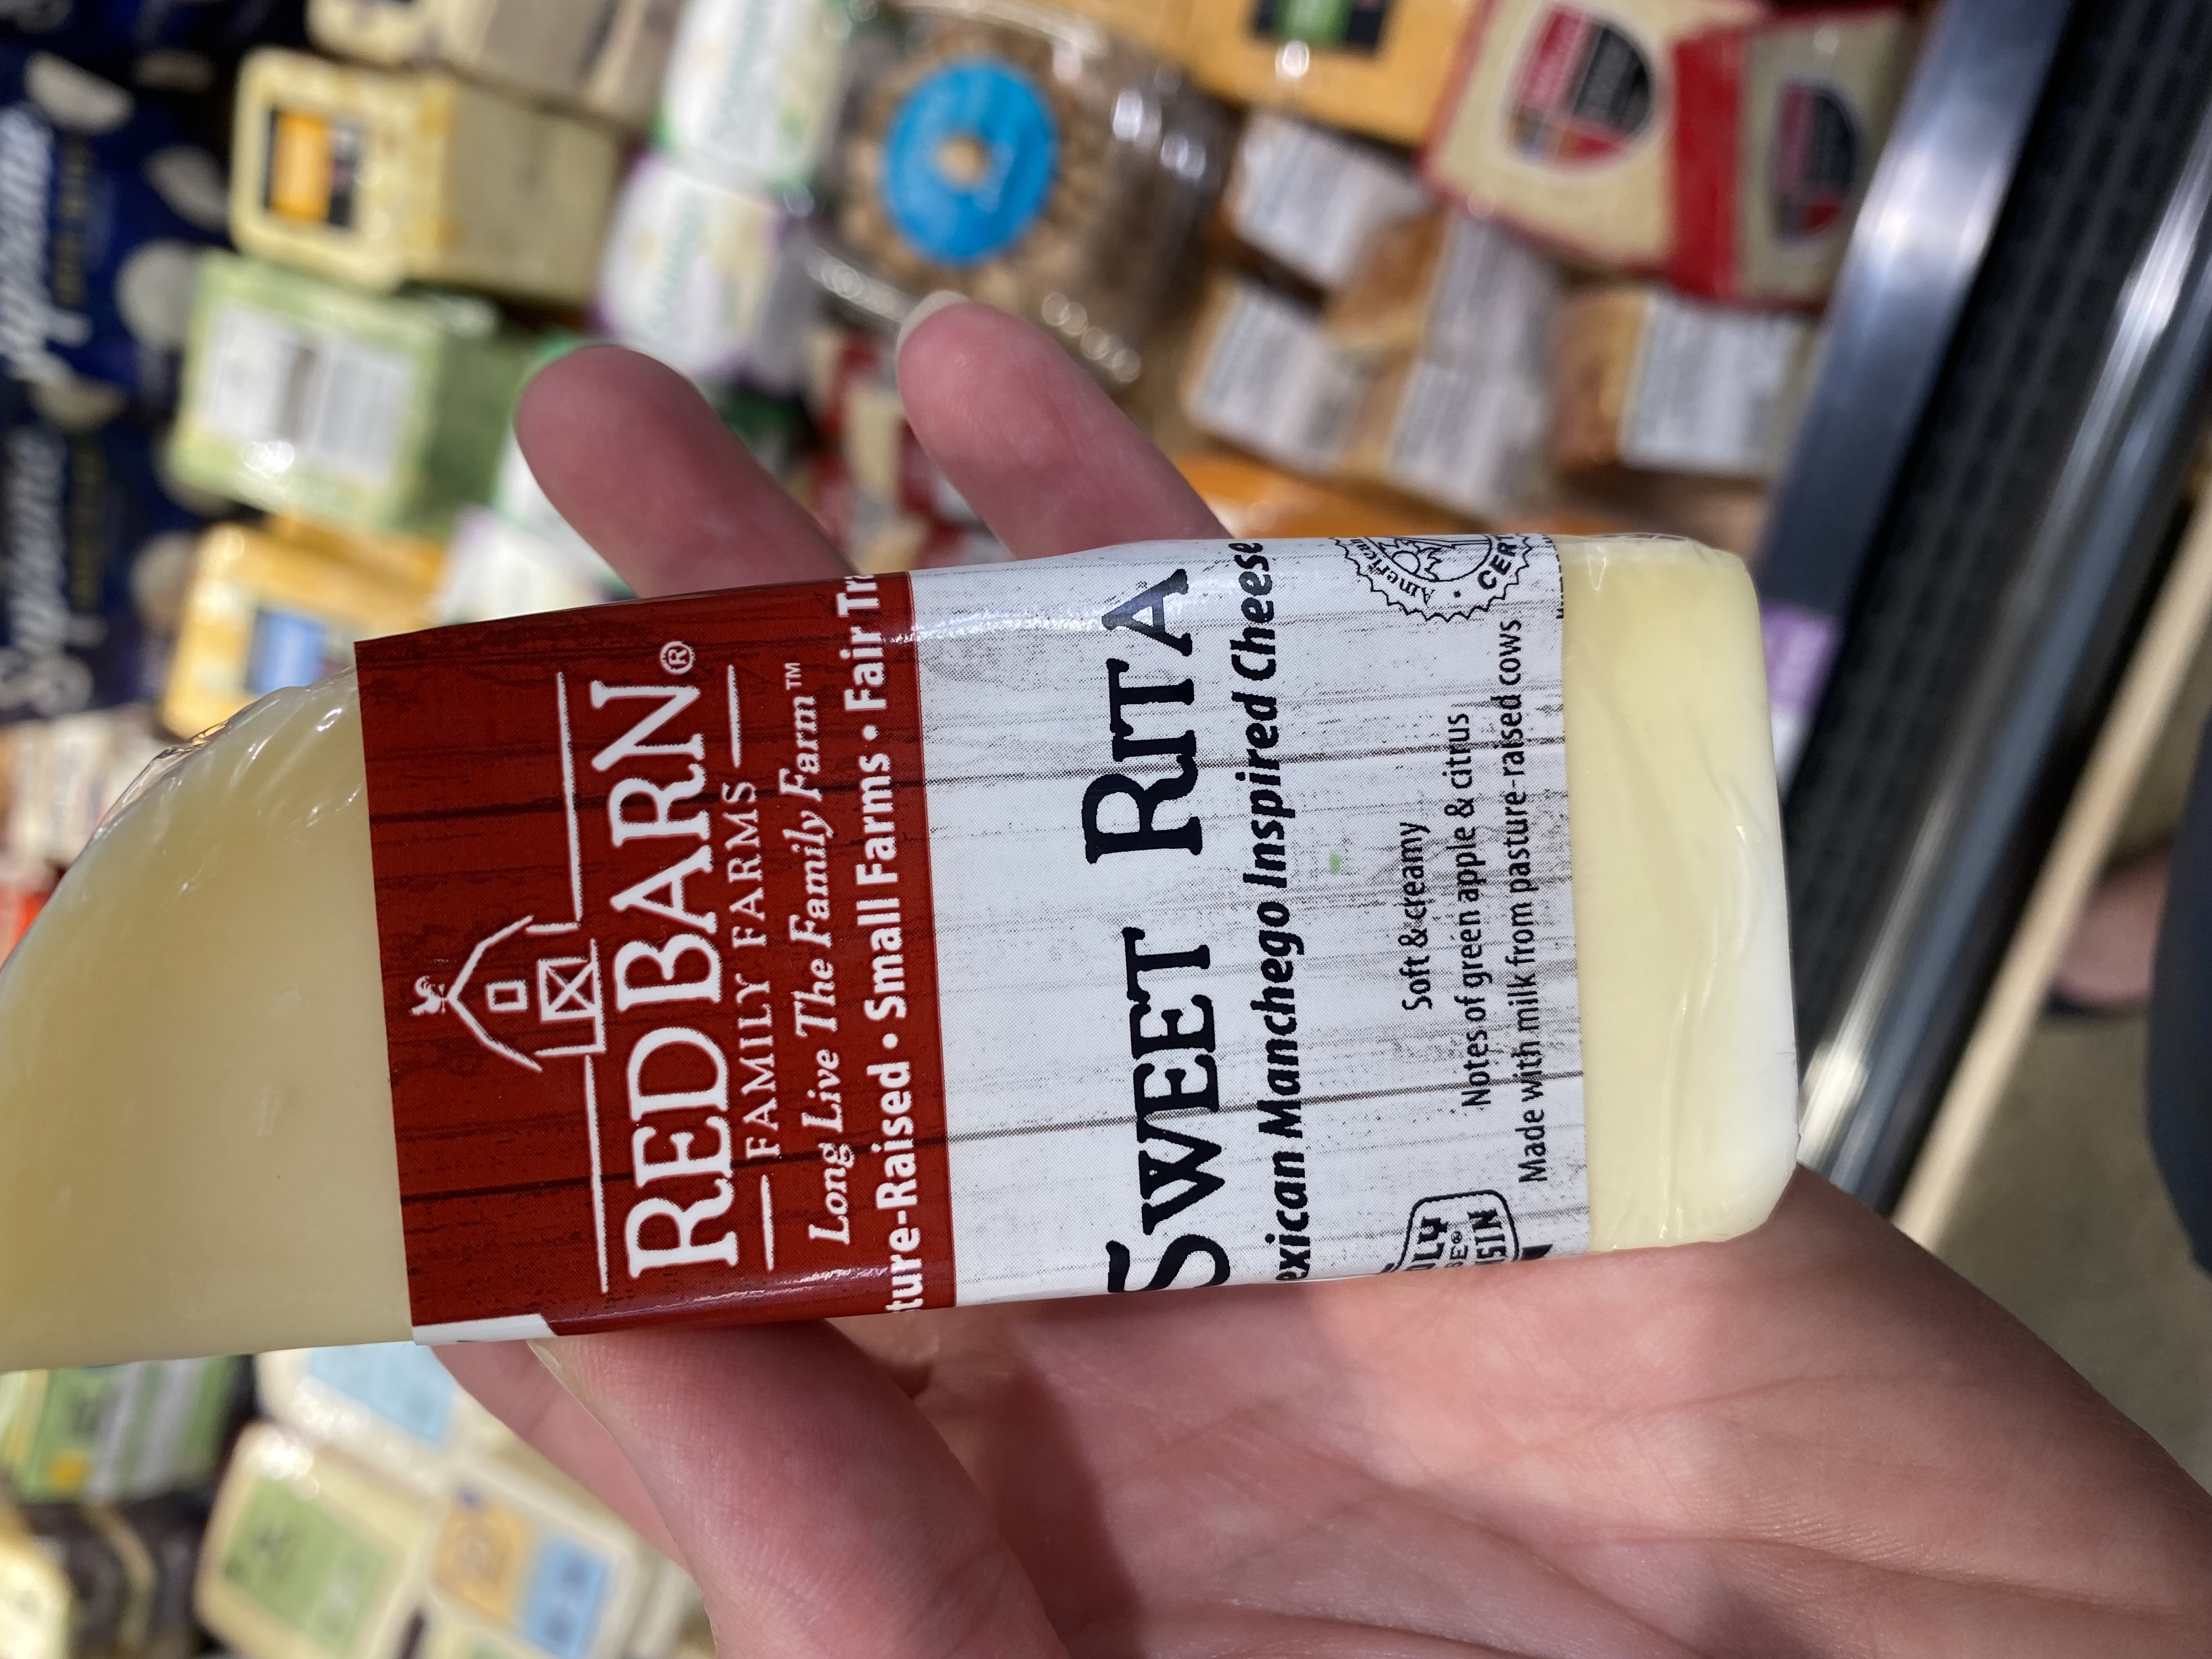 Red Barn Cheese sweet rita